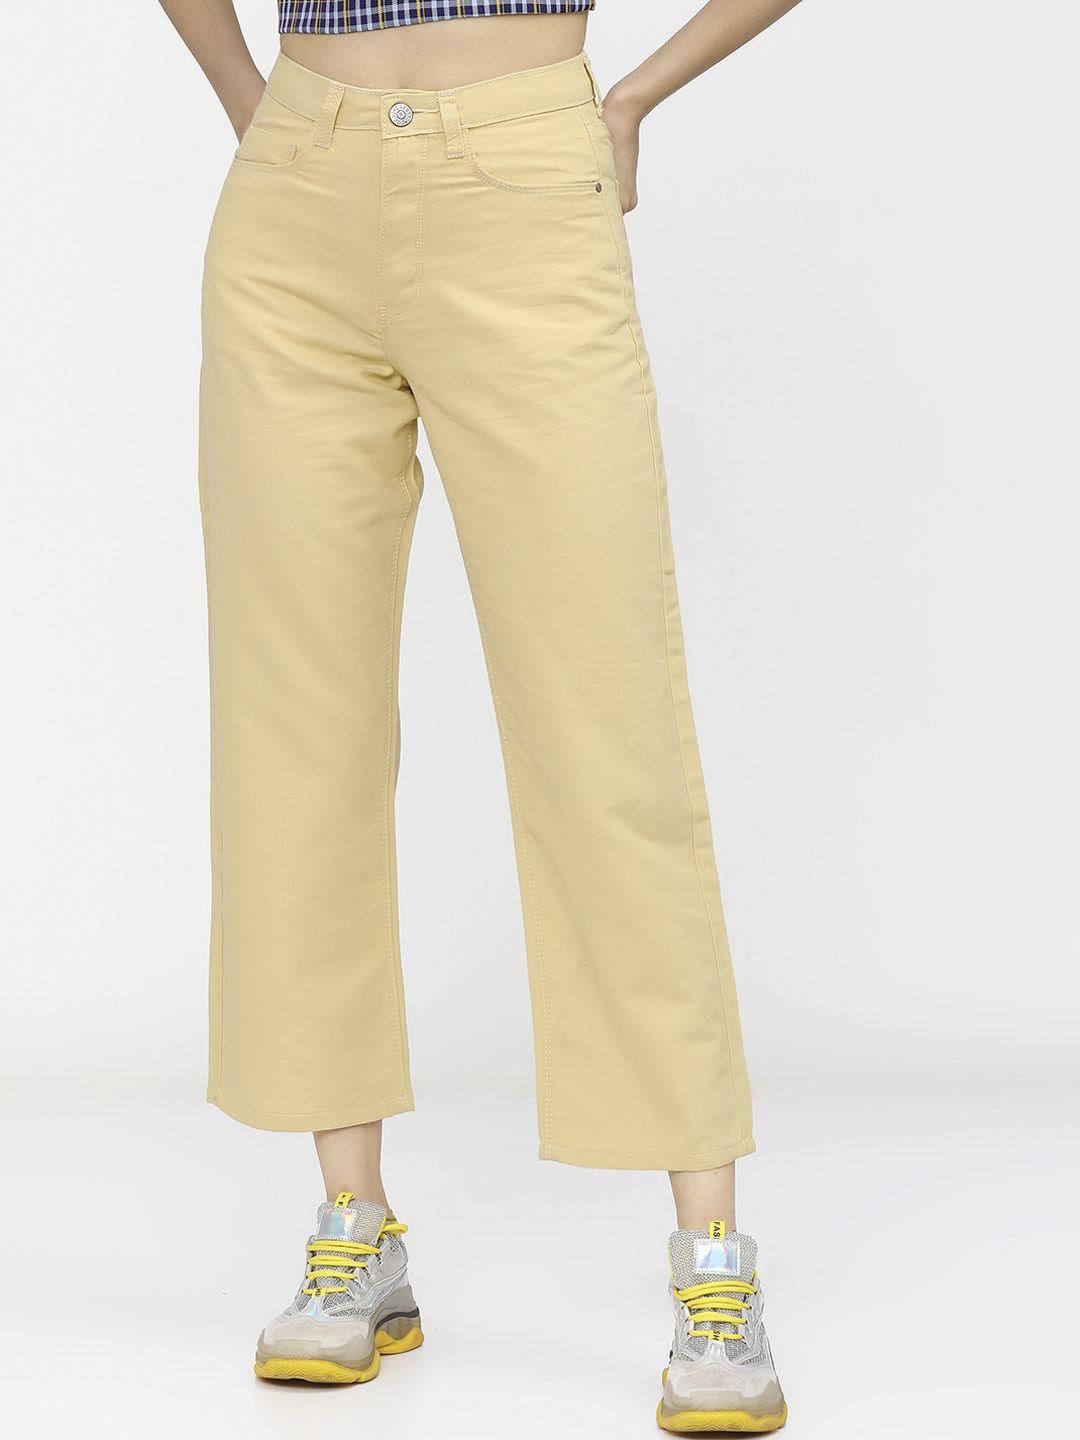 tokyo talkies women yellow wide leg stretchable jeans